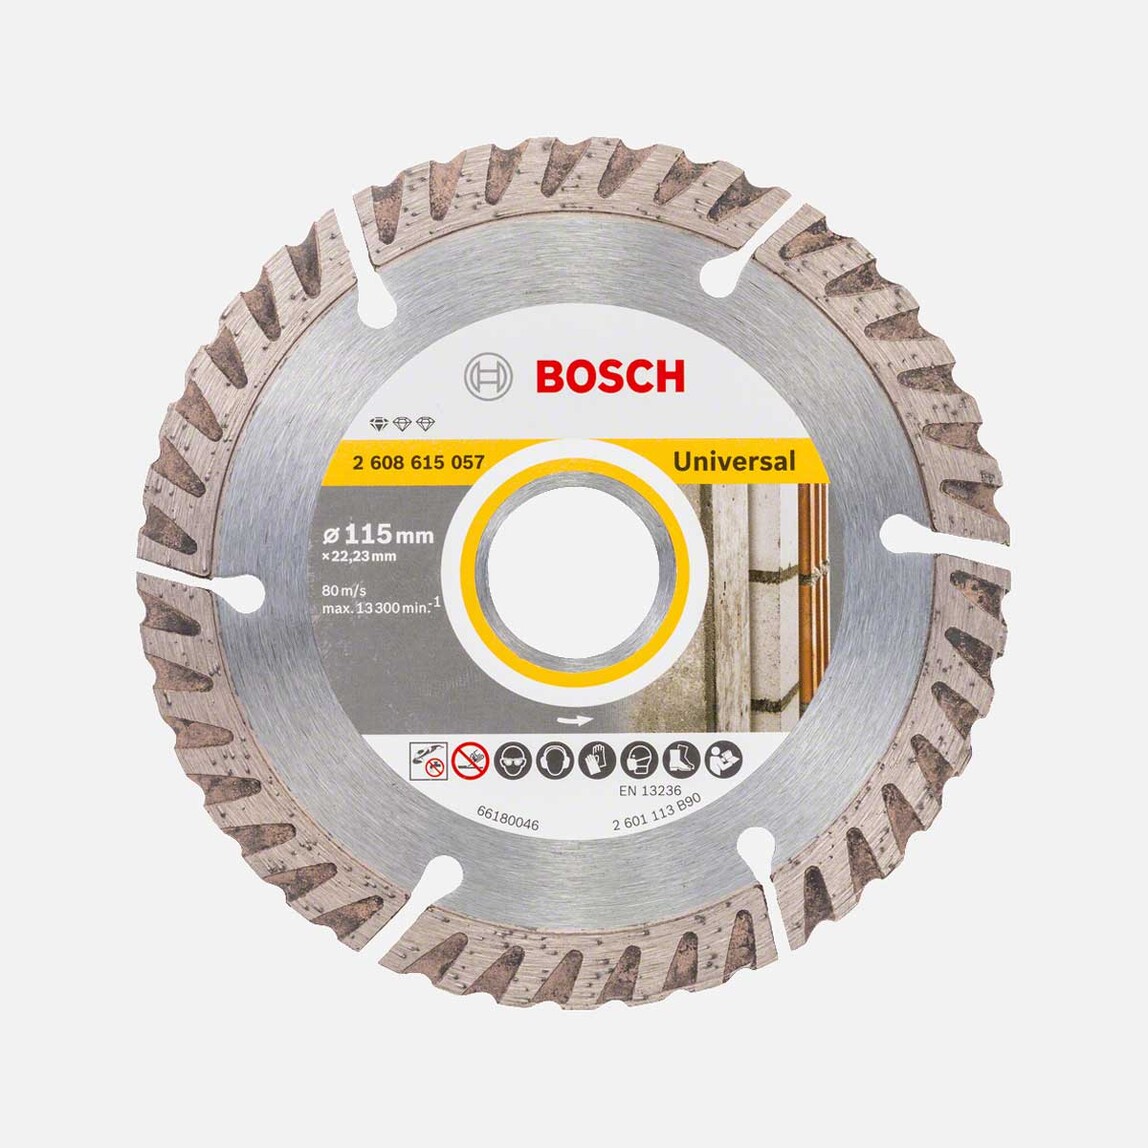    Bosch Elmas Disk  115 mm Standart For Unıversal  